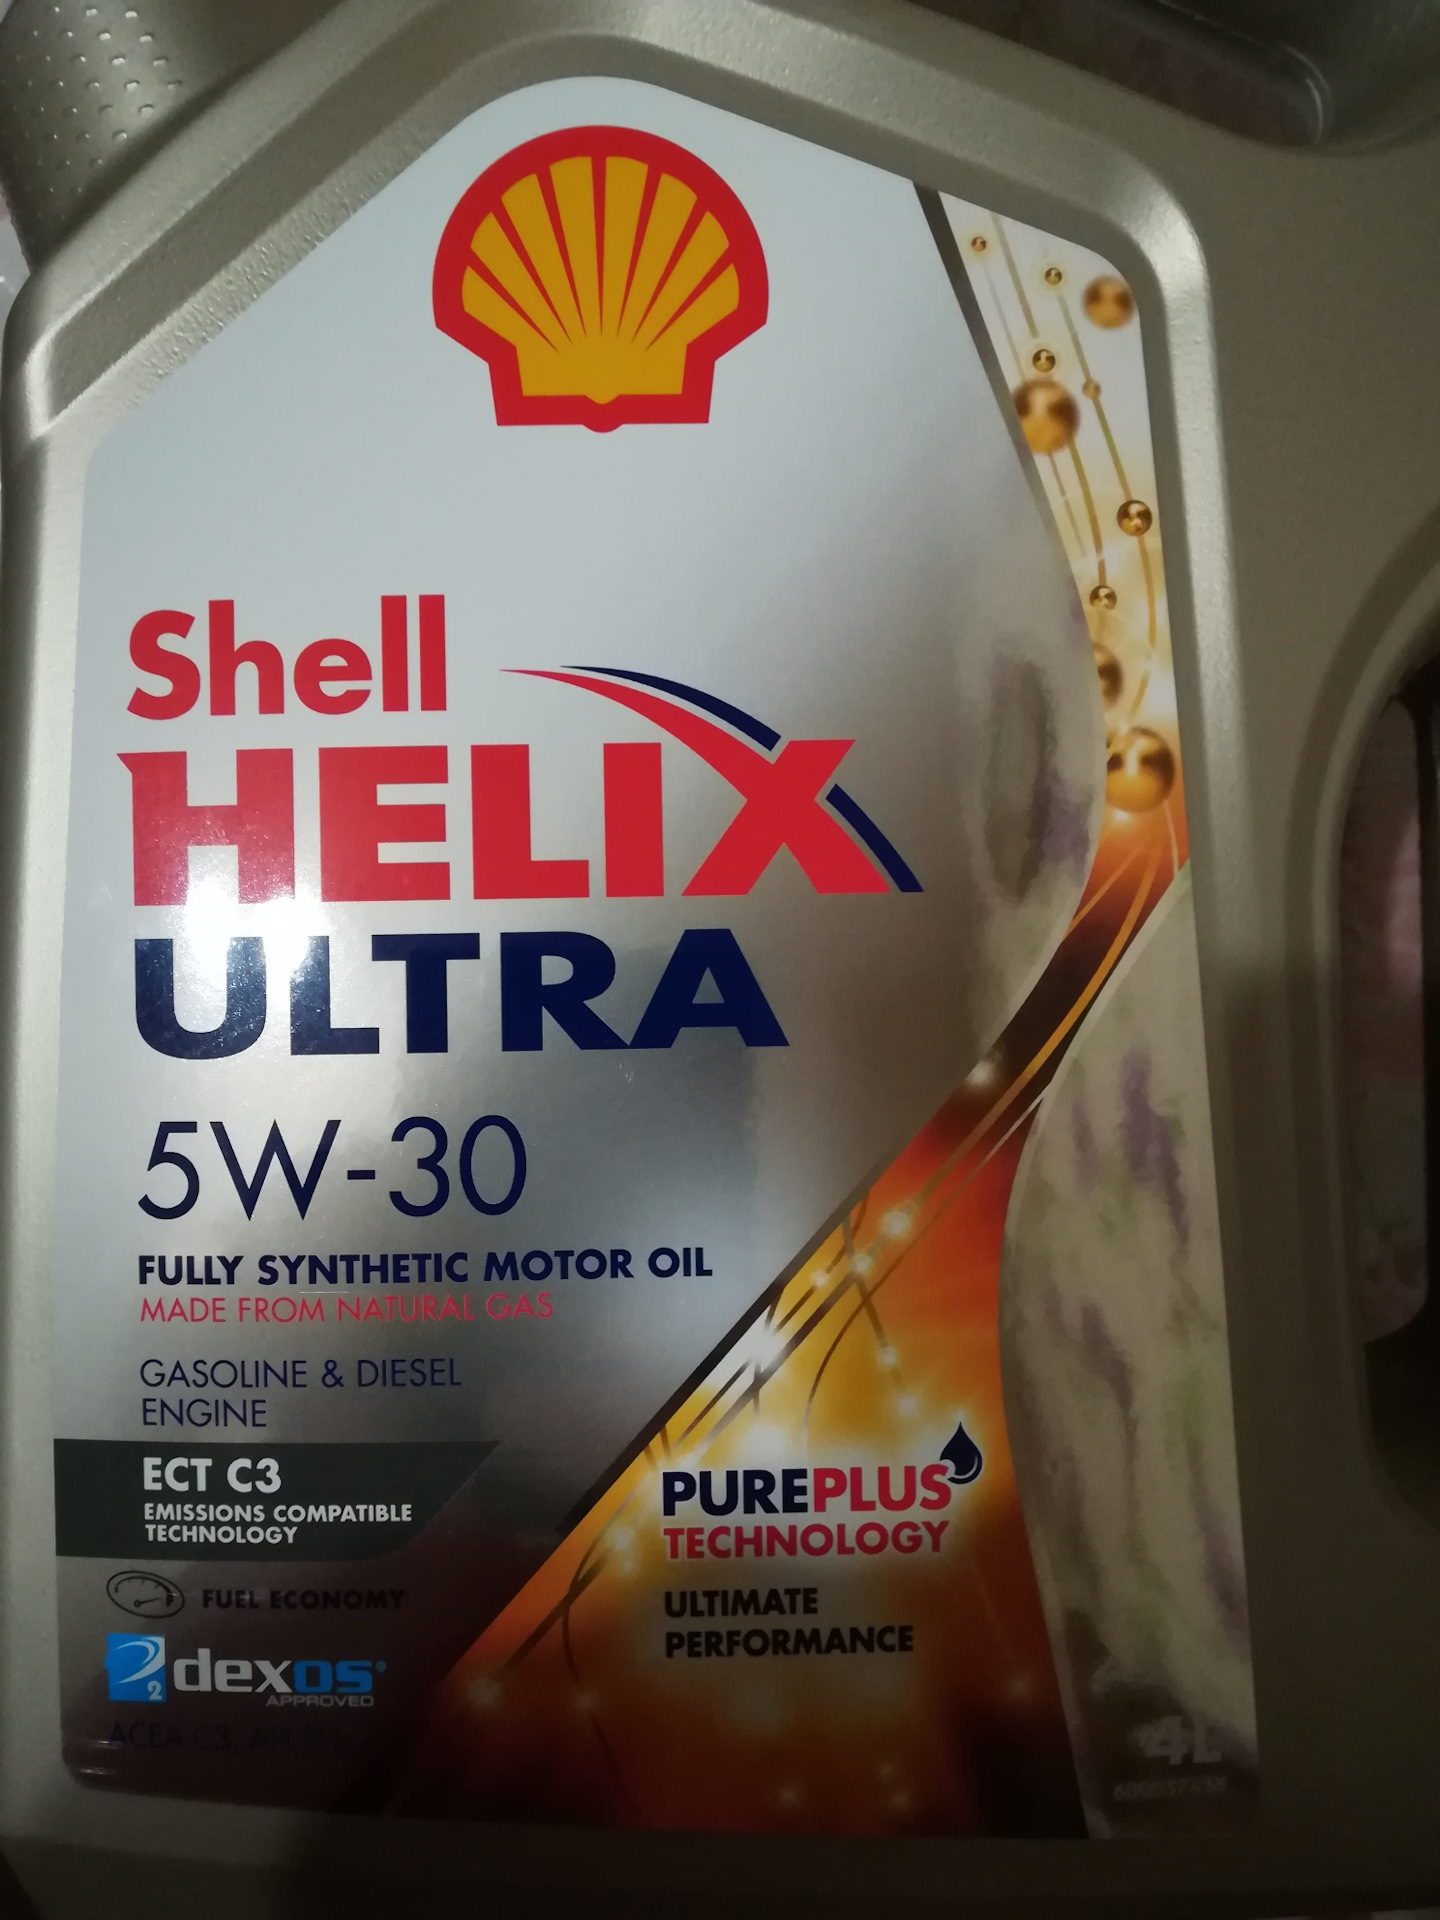 Объем масла солярис 1. Shell 5w30 Hyundai. Масло Шелл Хеликс ультра 5w30 для Хендай Солярис. Shell Helix Ultra 5w30 в Хендай Солярис. Шелл ультра 5w30 Хундай.